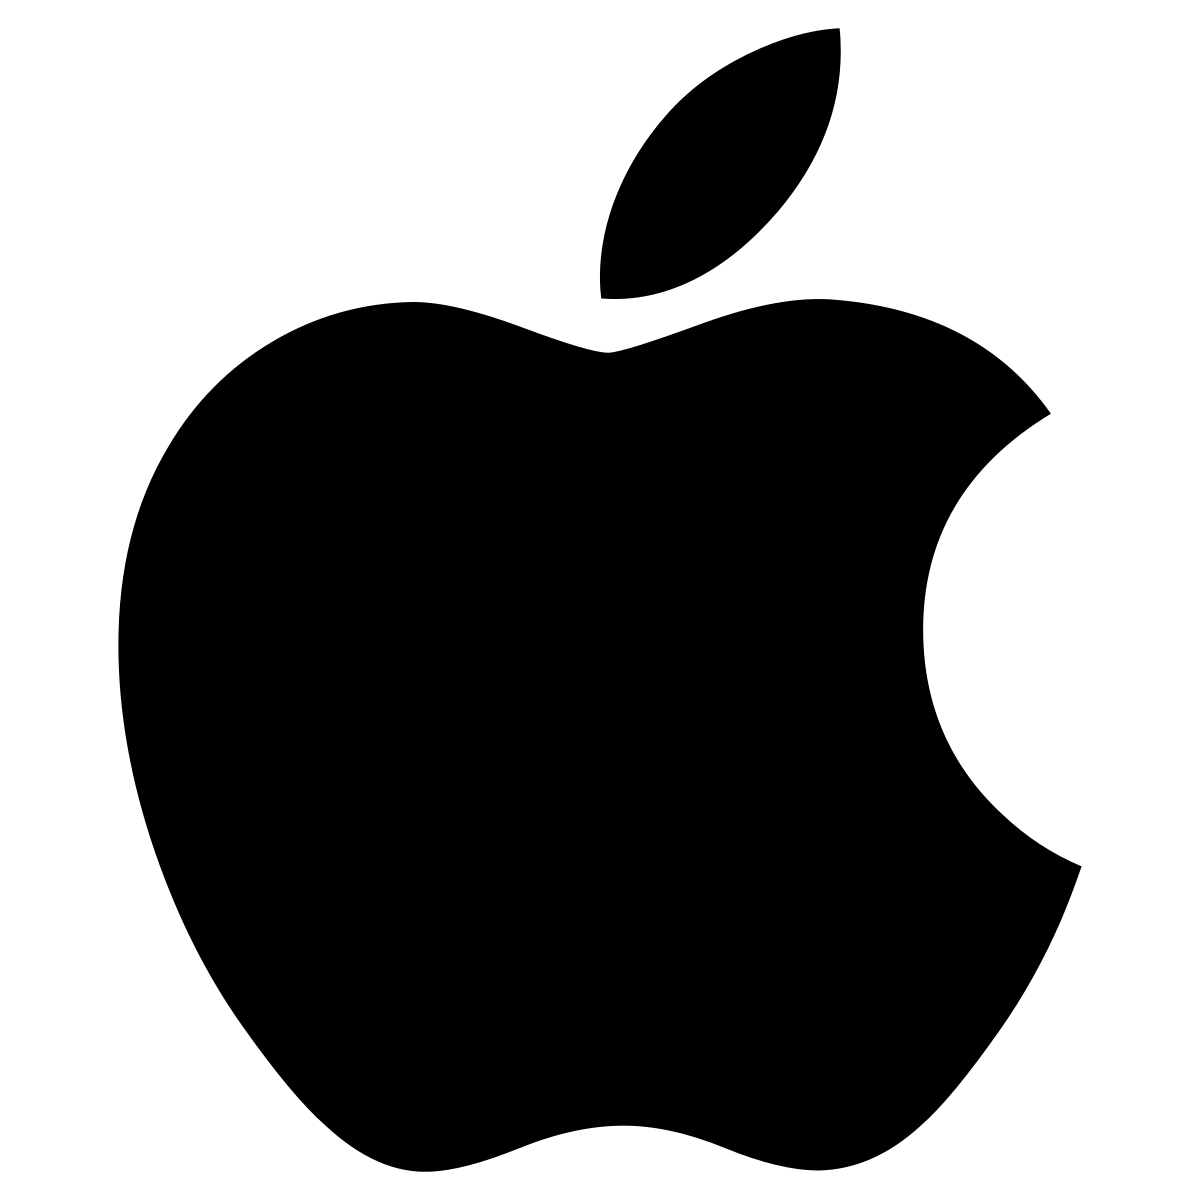 Black Apple logo PNG fotos